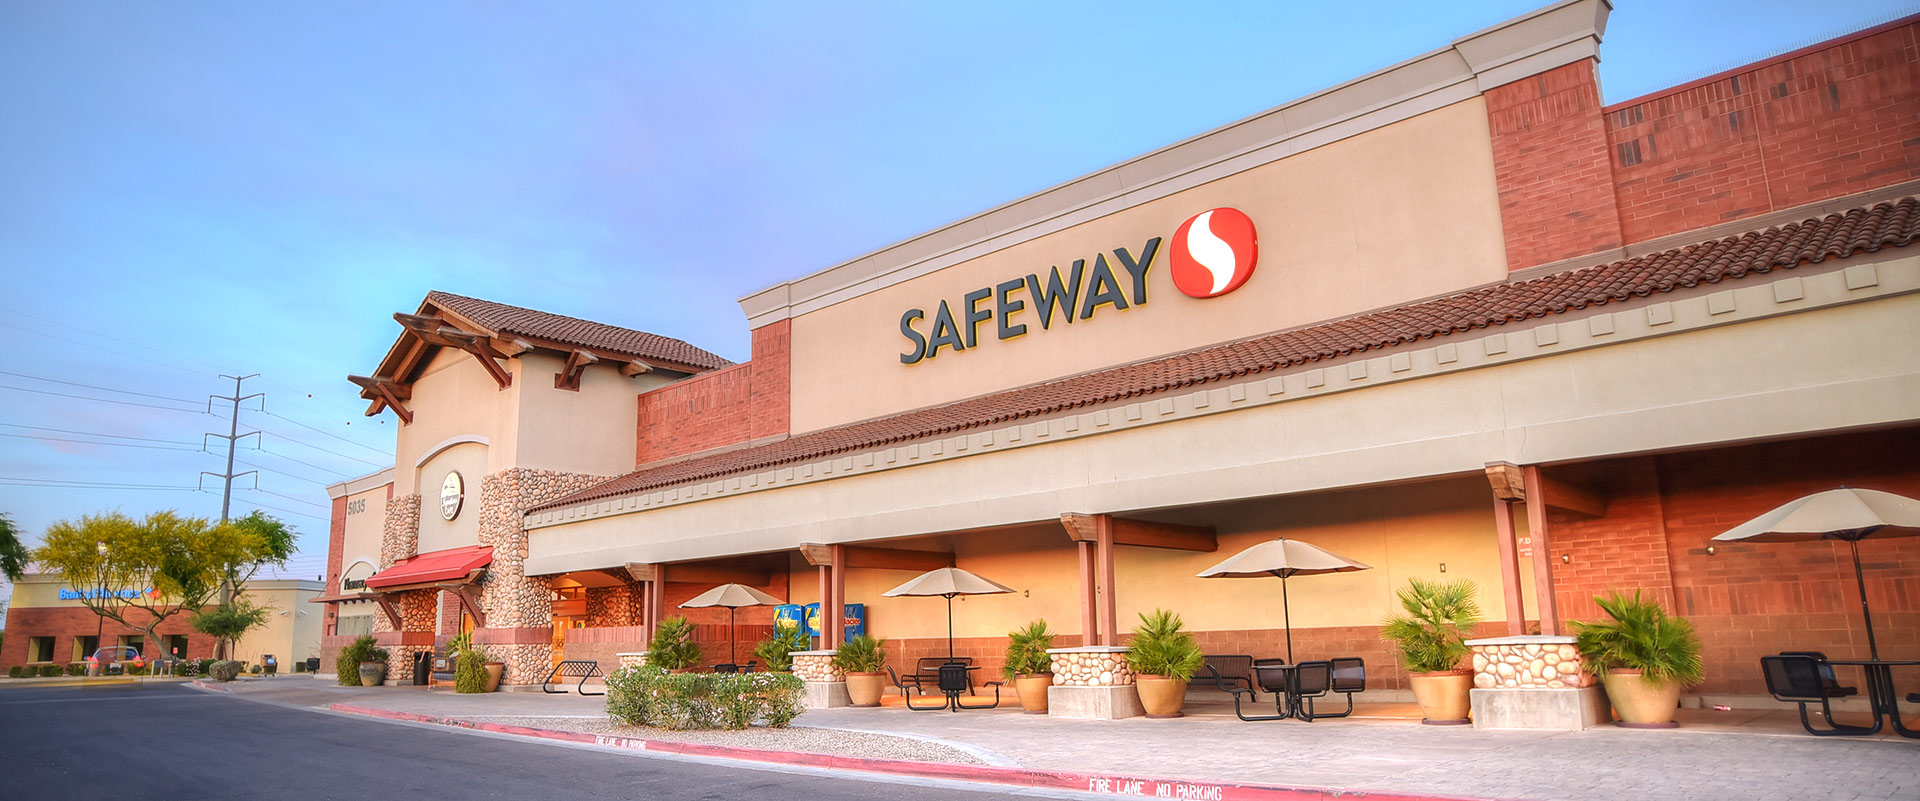 A Safeway storefront